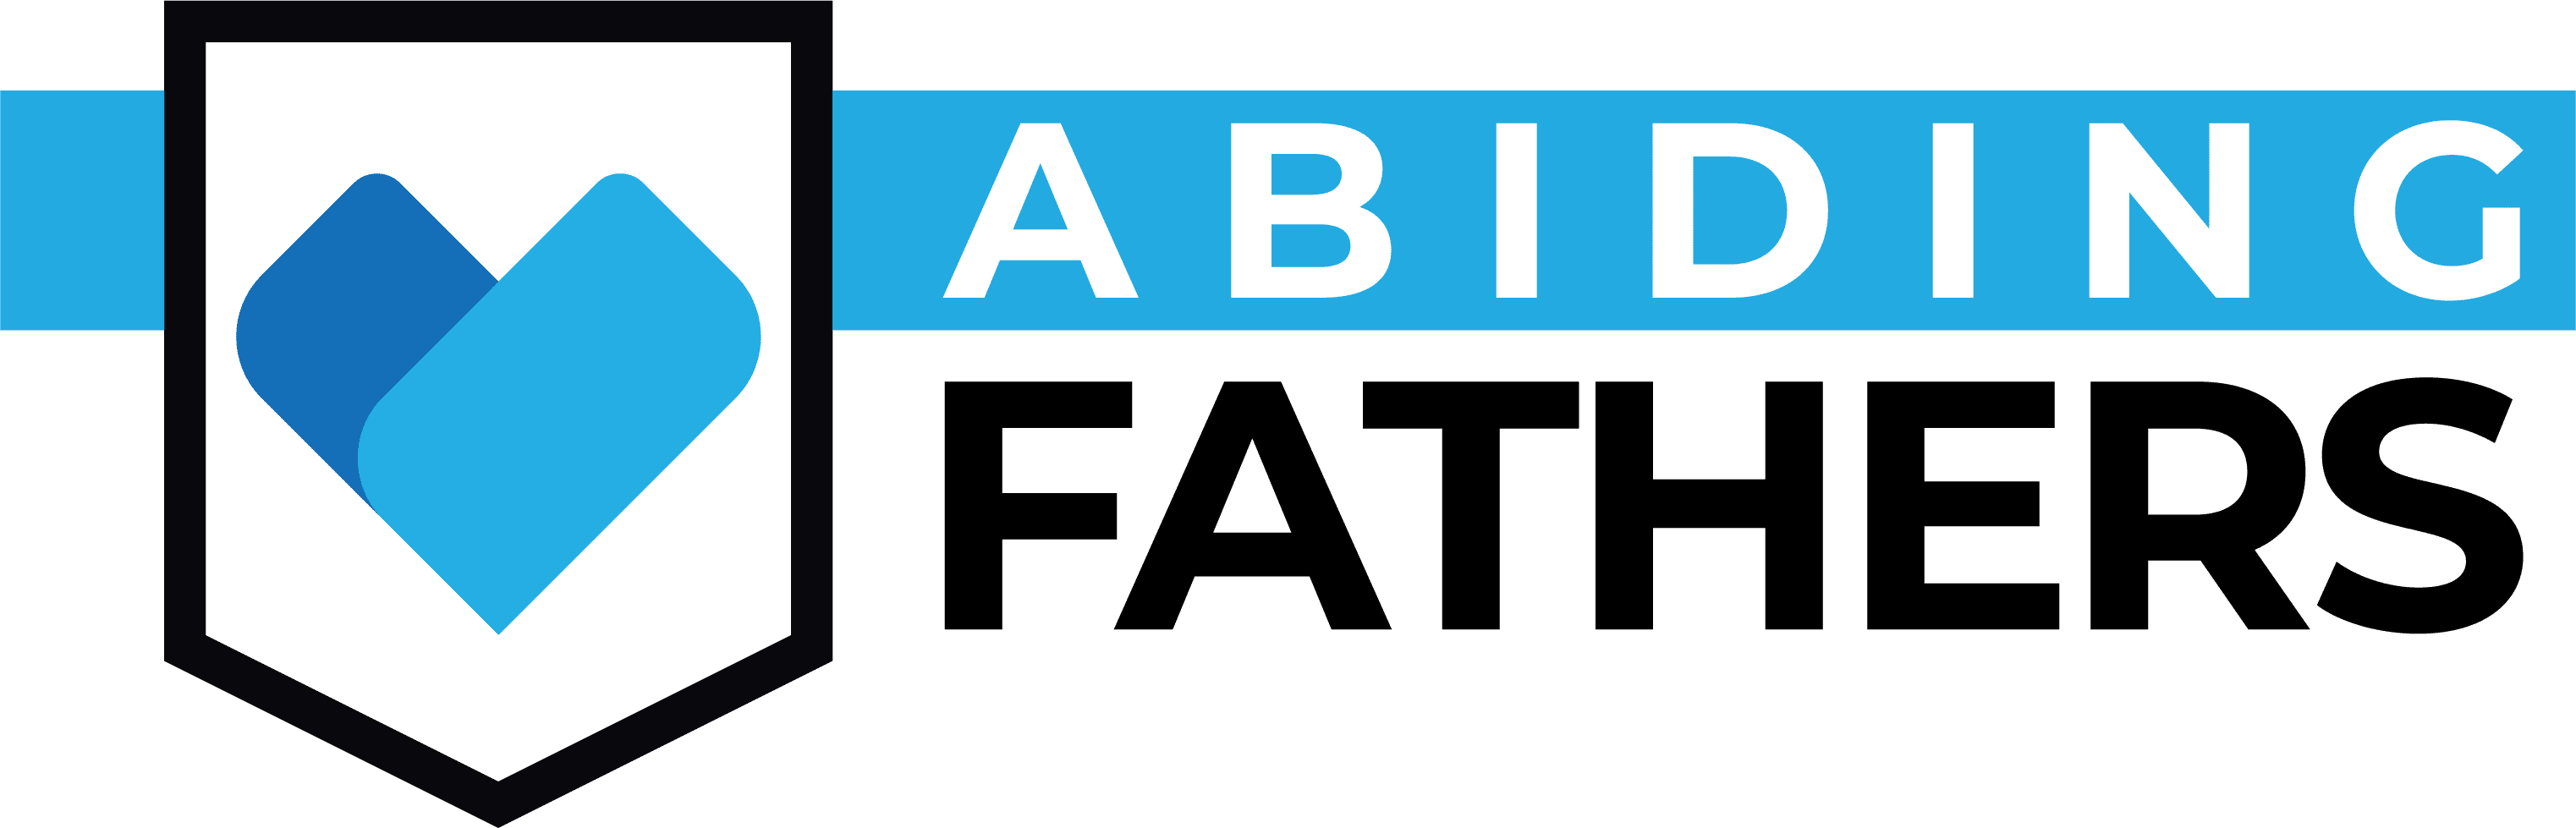 Abiding Fathers logo.